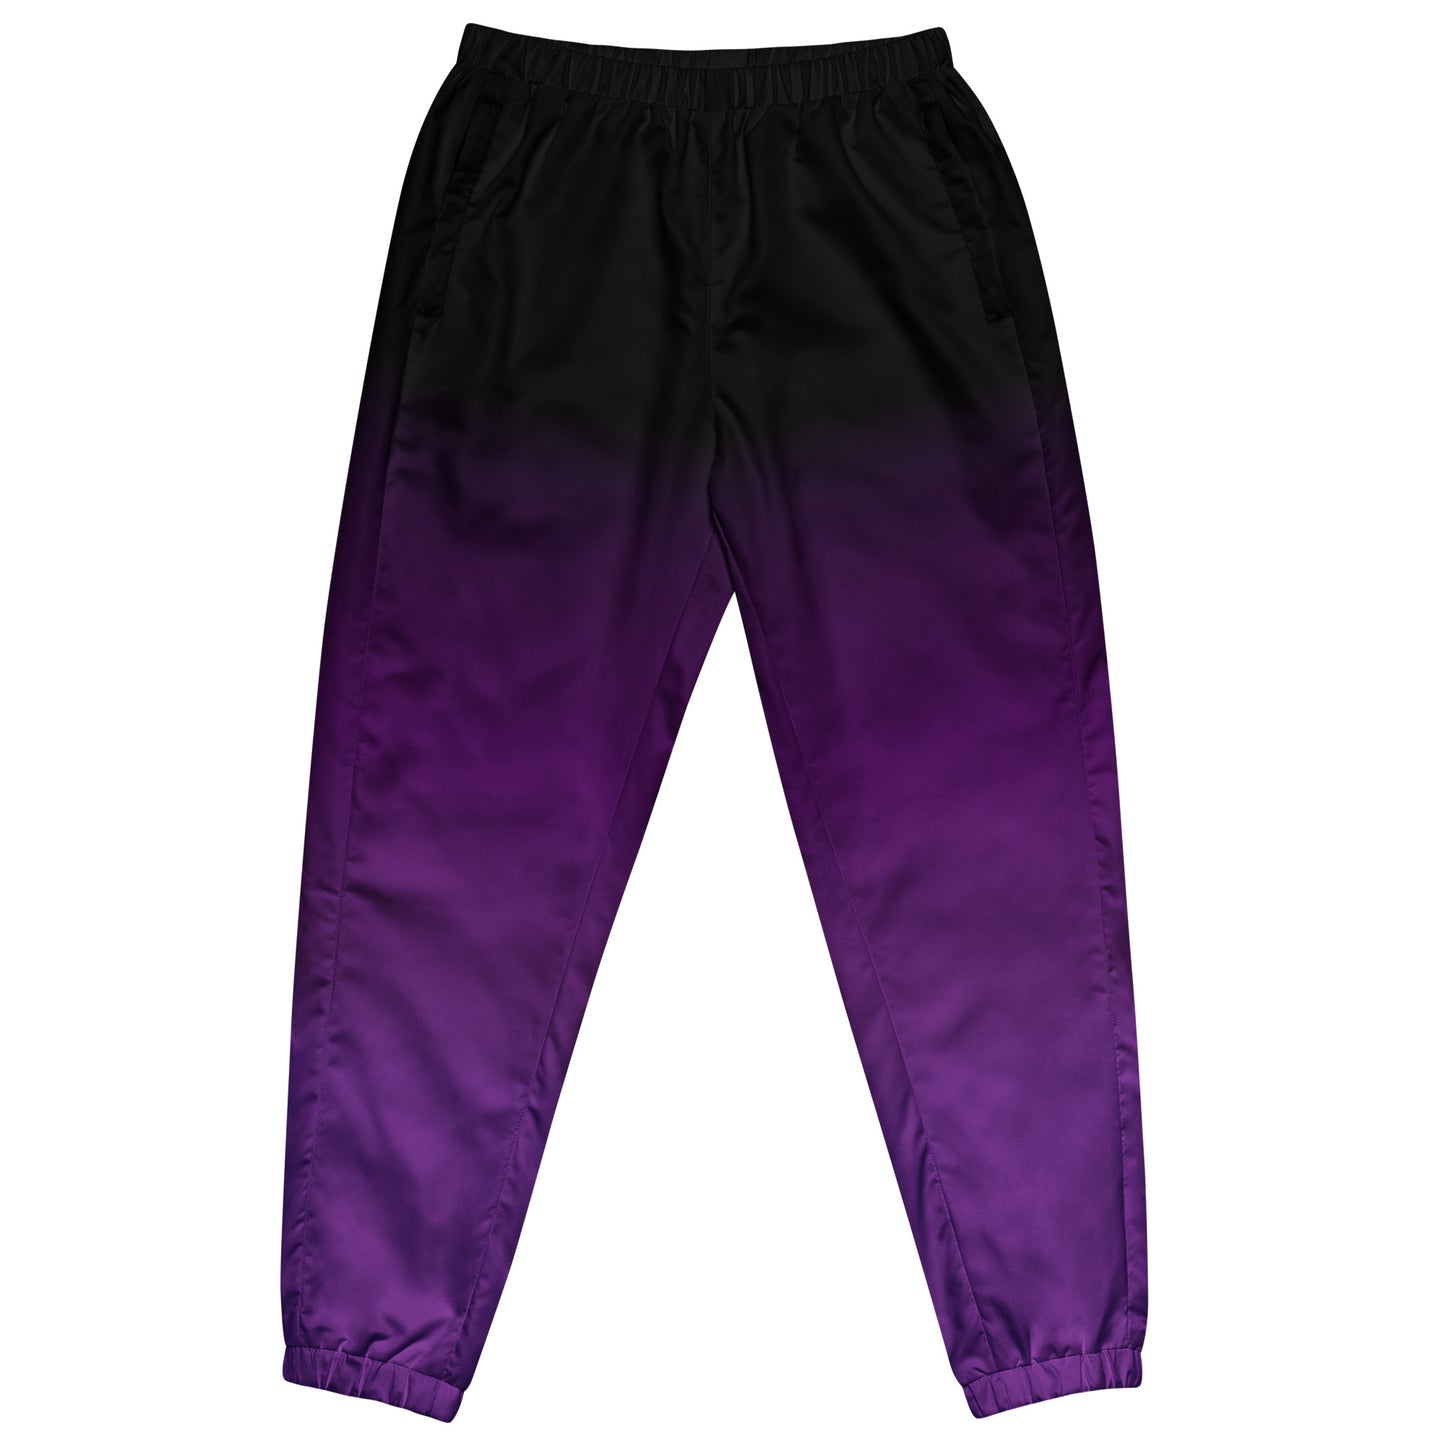 Gradient Black to Purple Unisex track pants